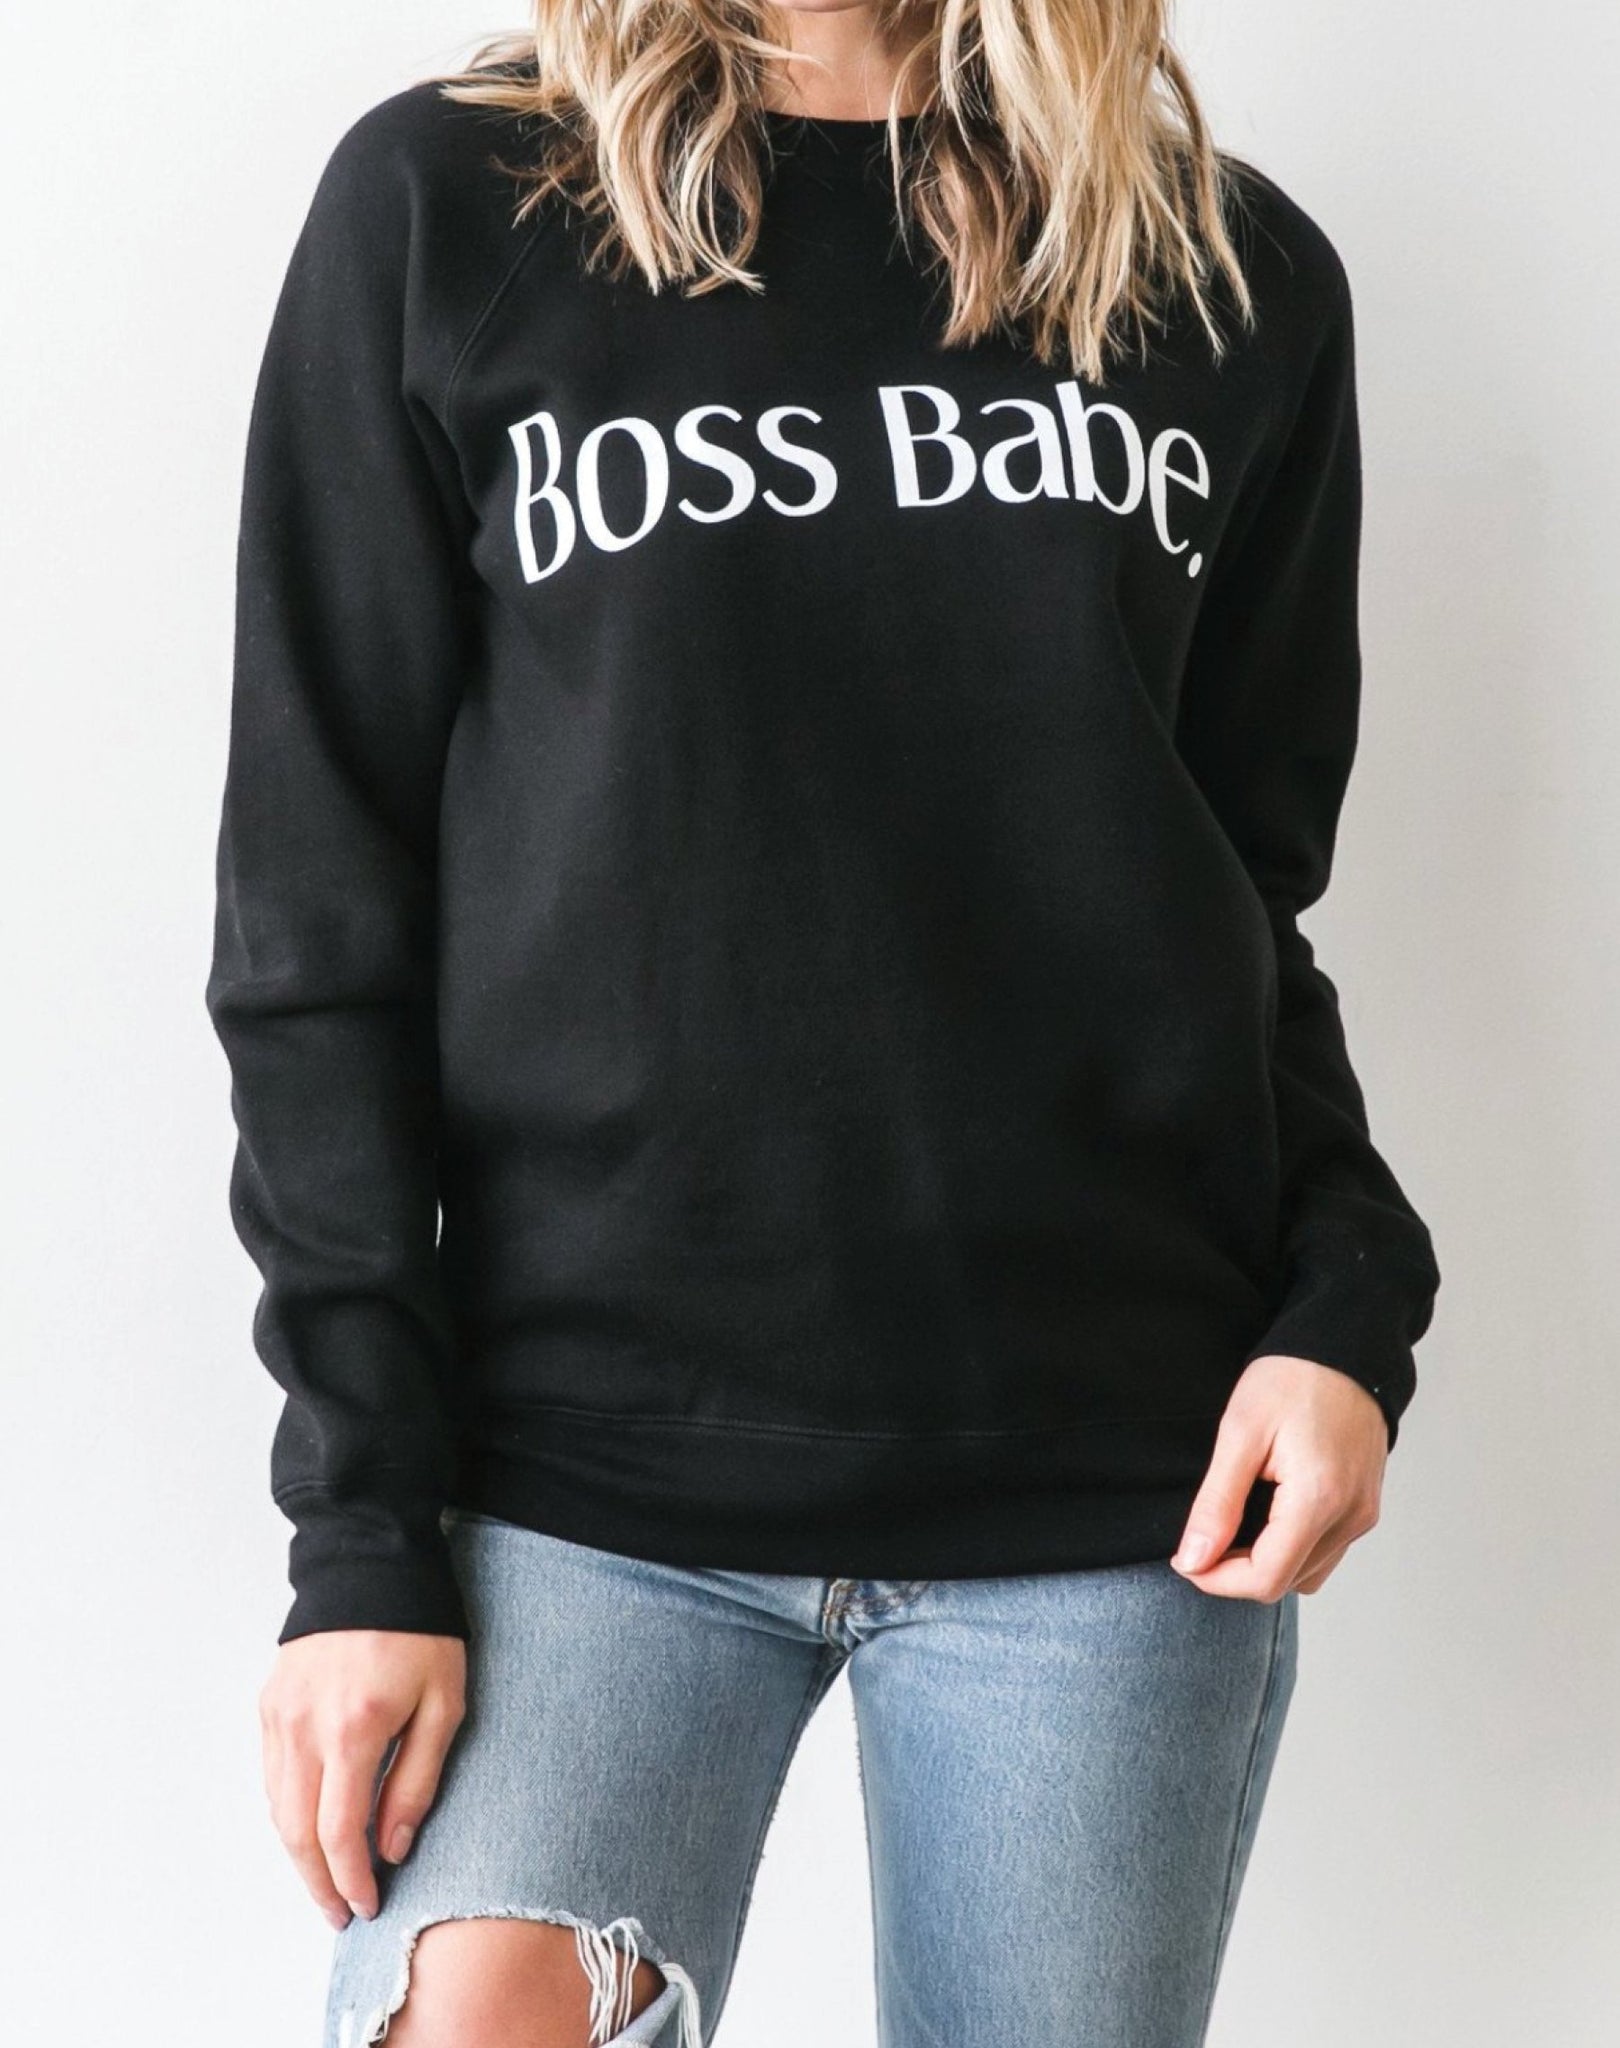 BOSS Boss Everie Top in Black